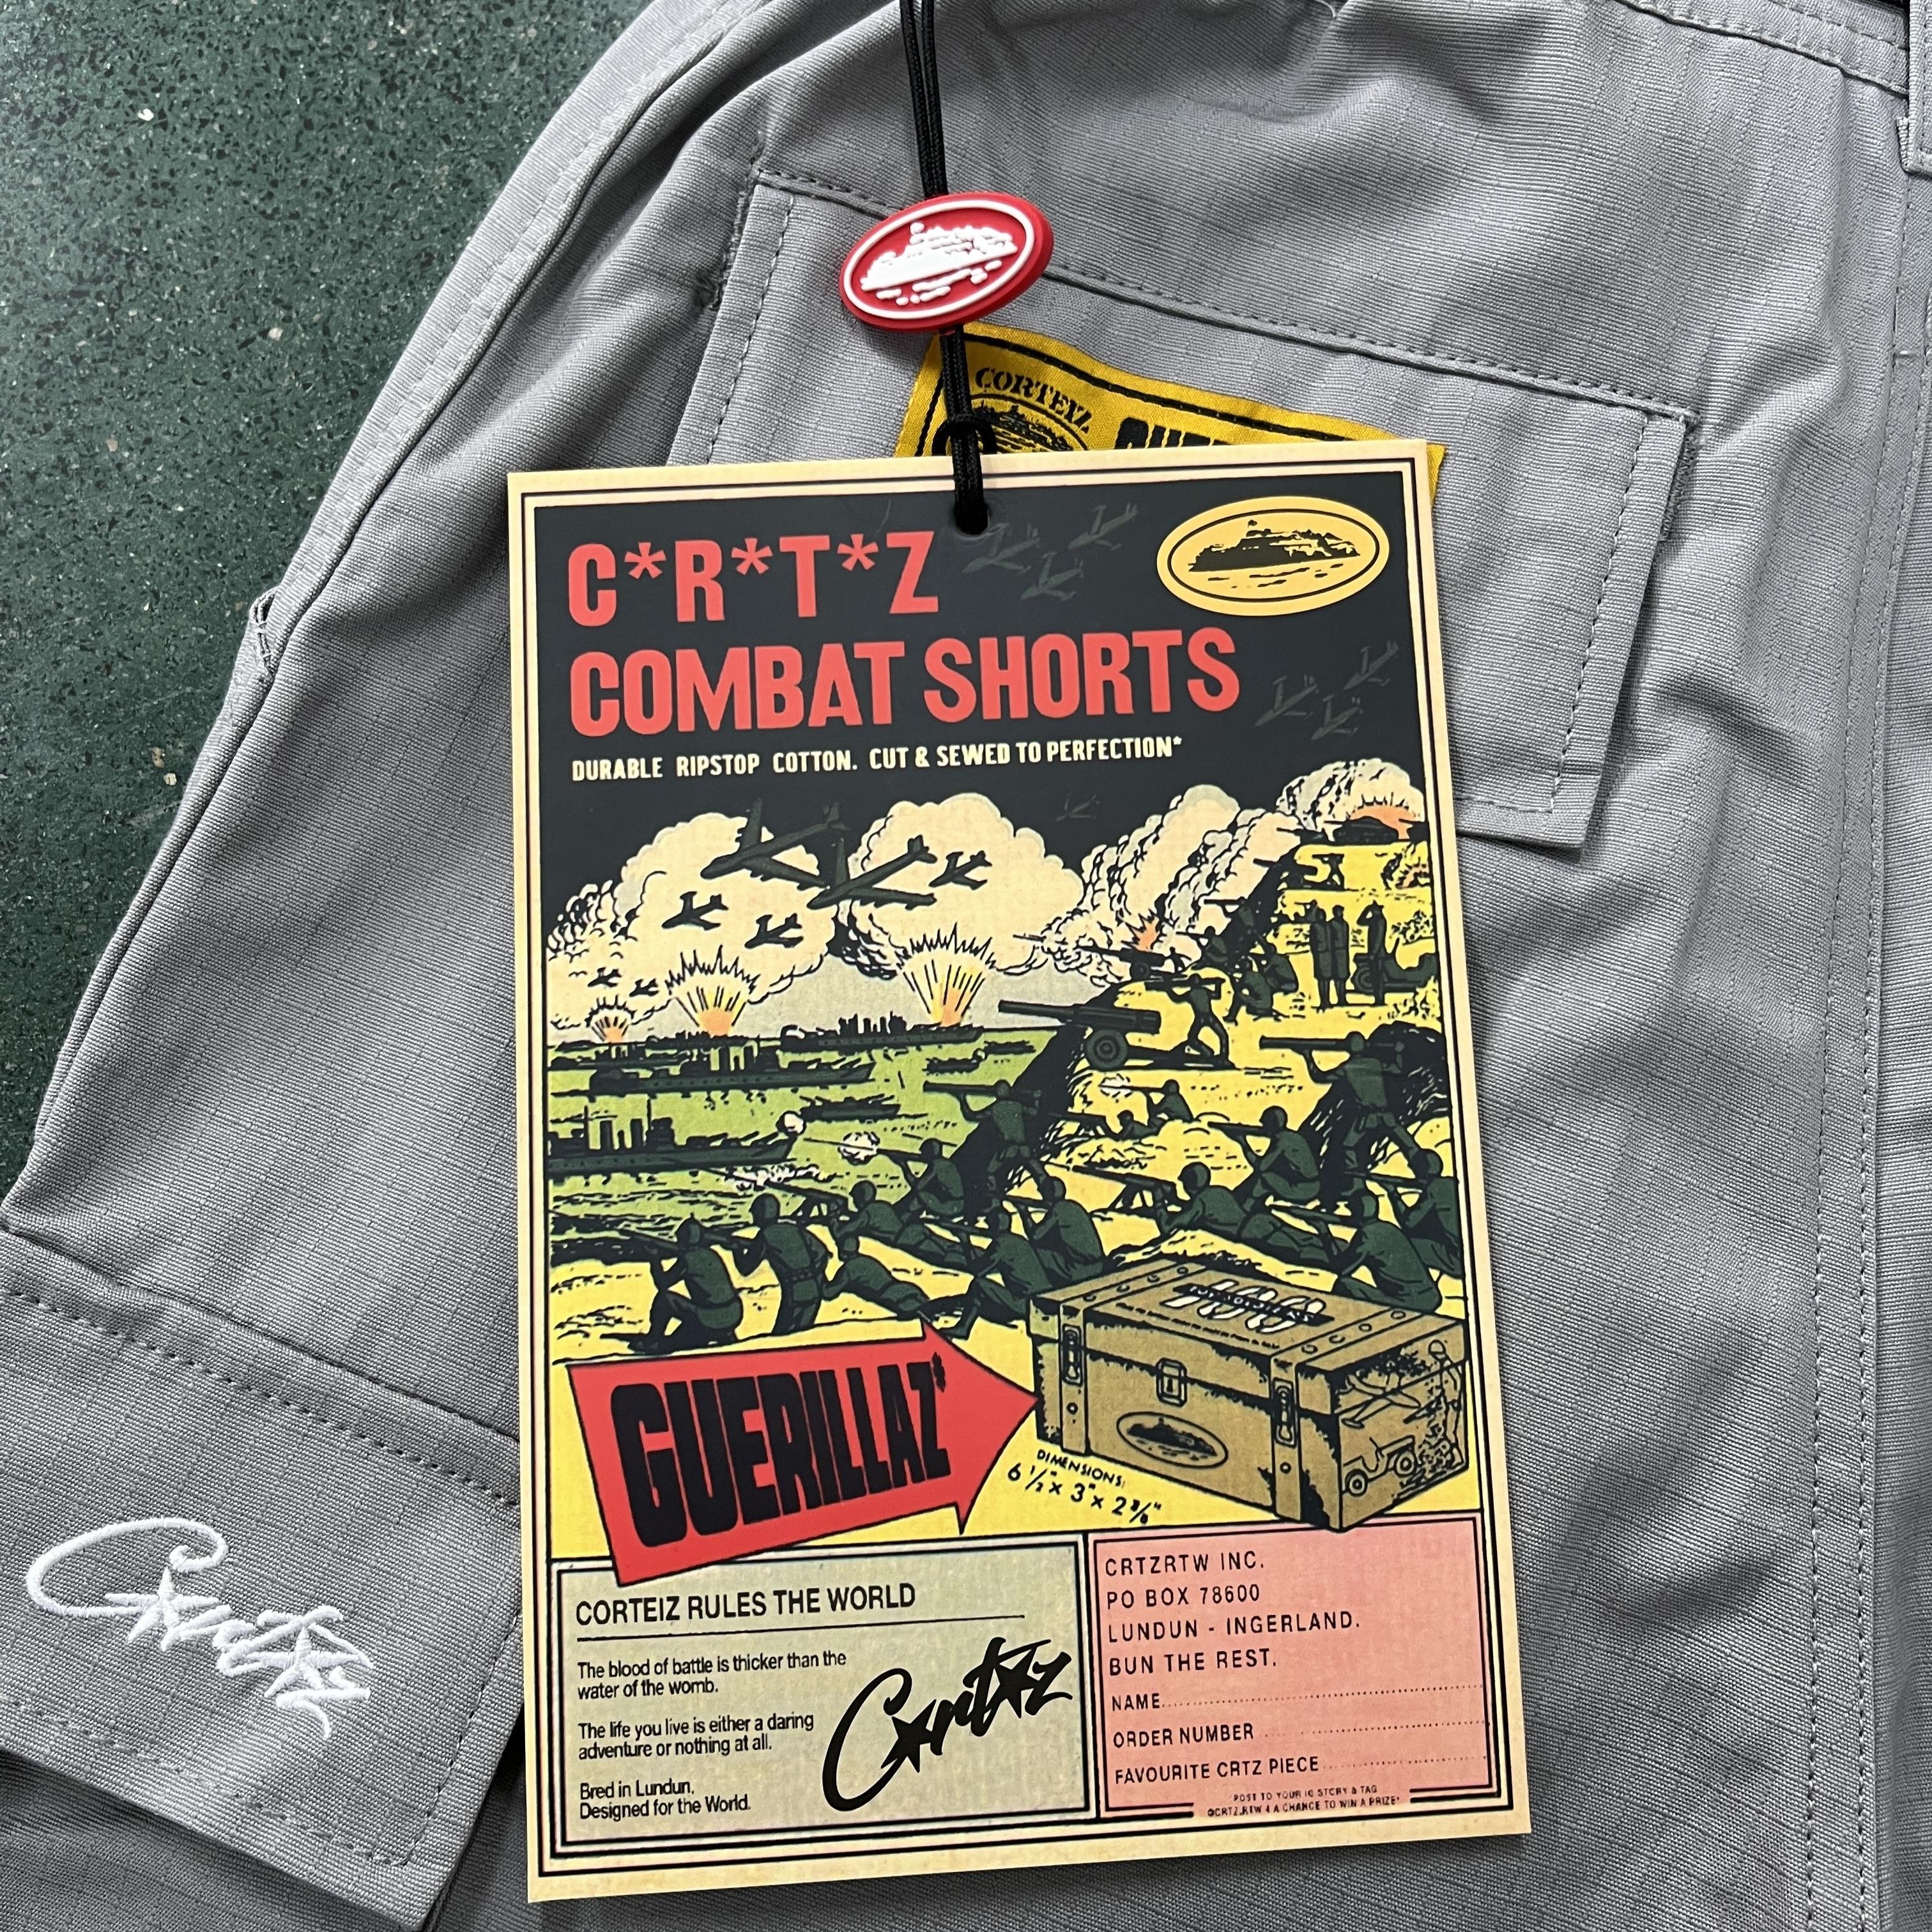 Corteiz Alcatraz Cargo Shorts v1:1 – A Fonte